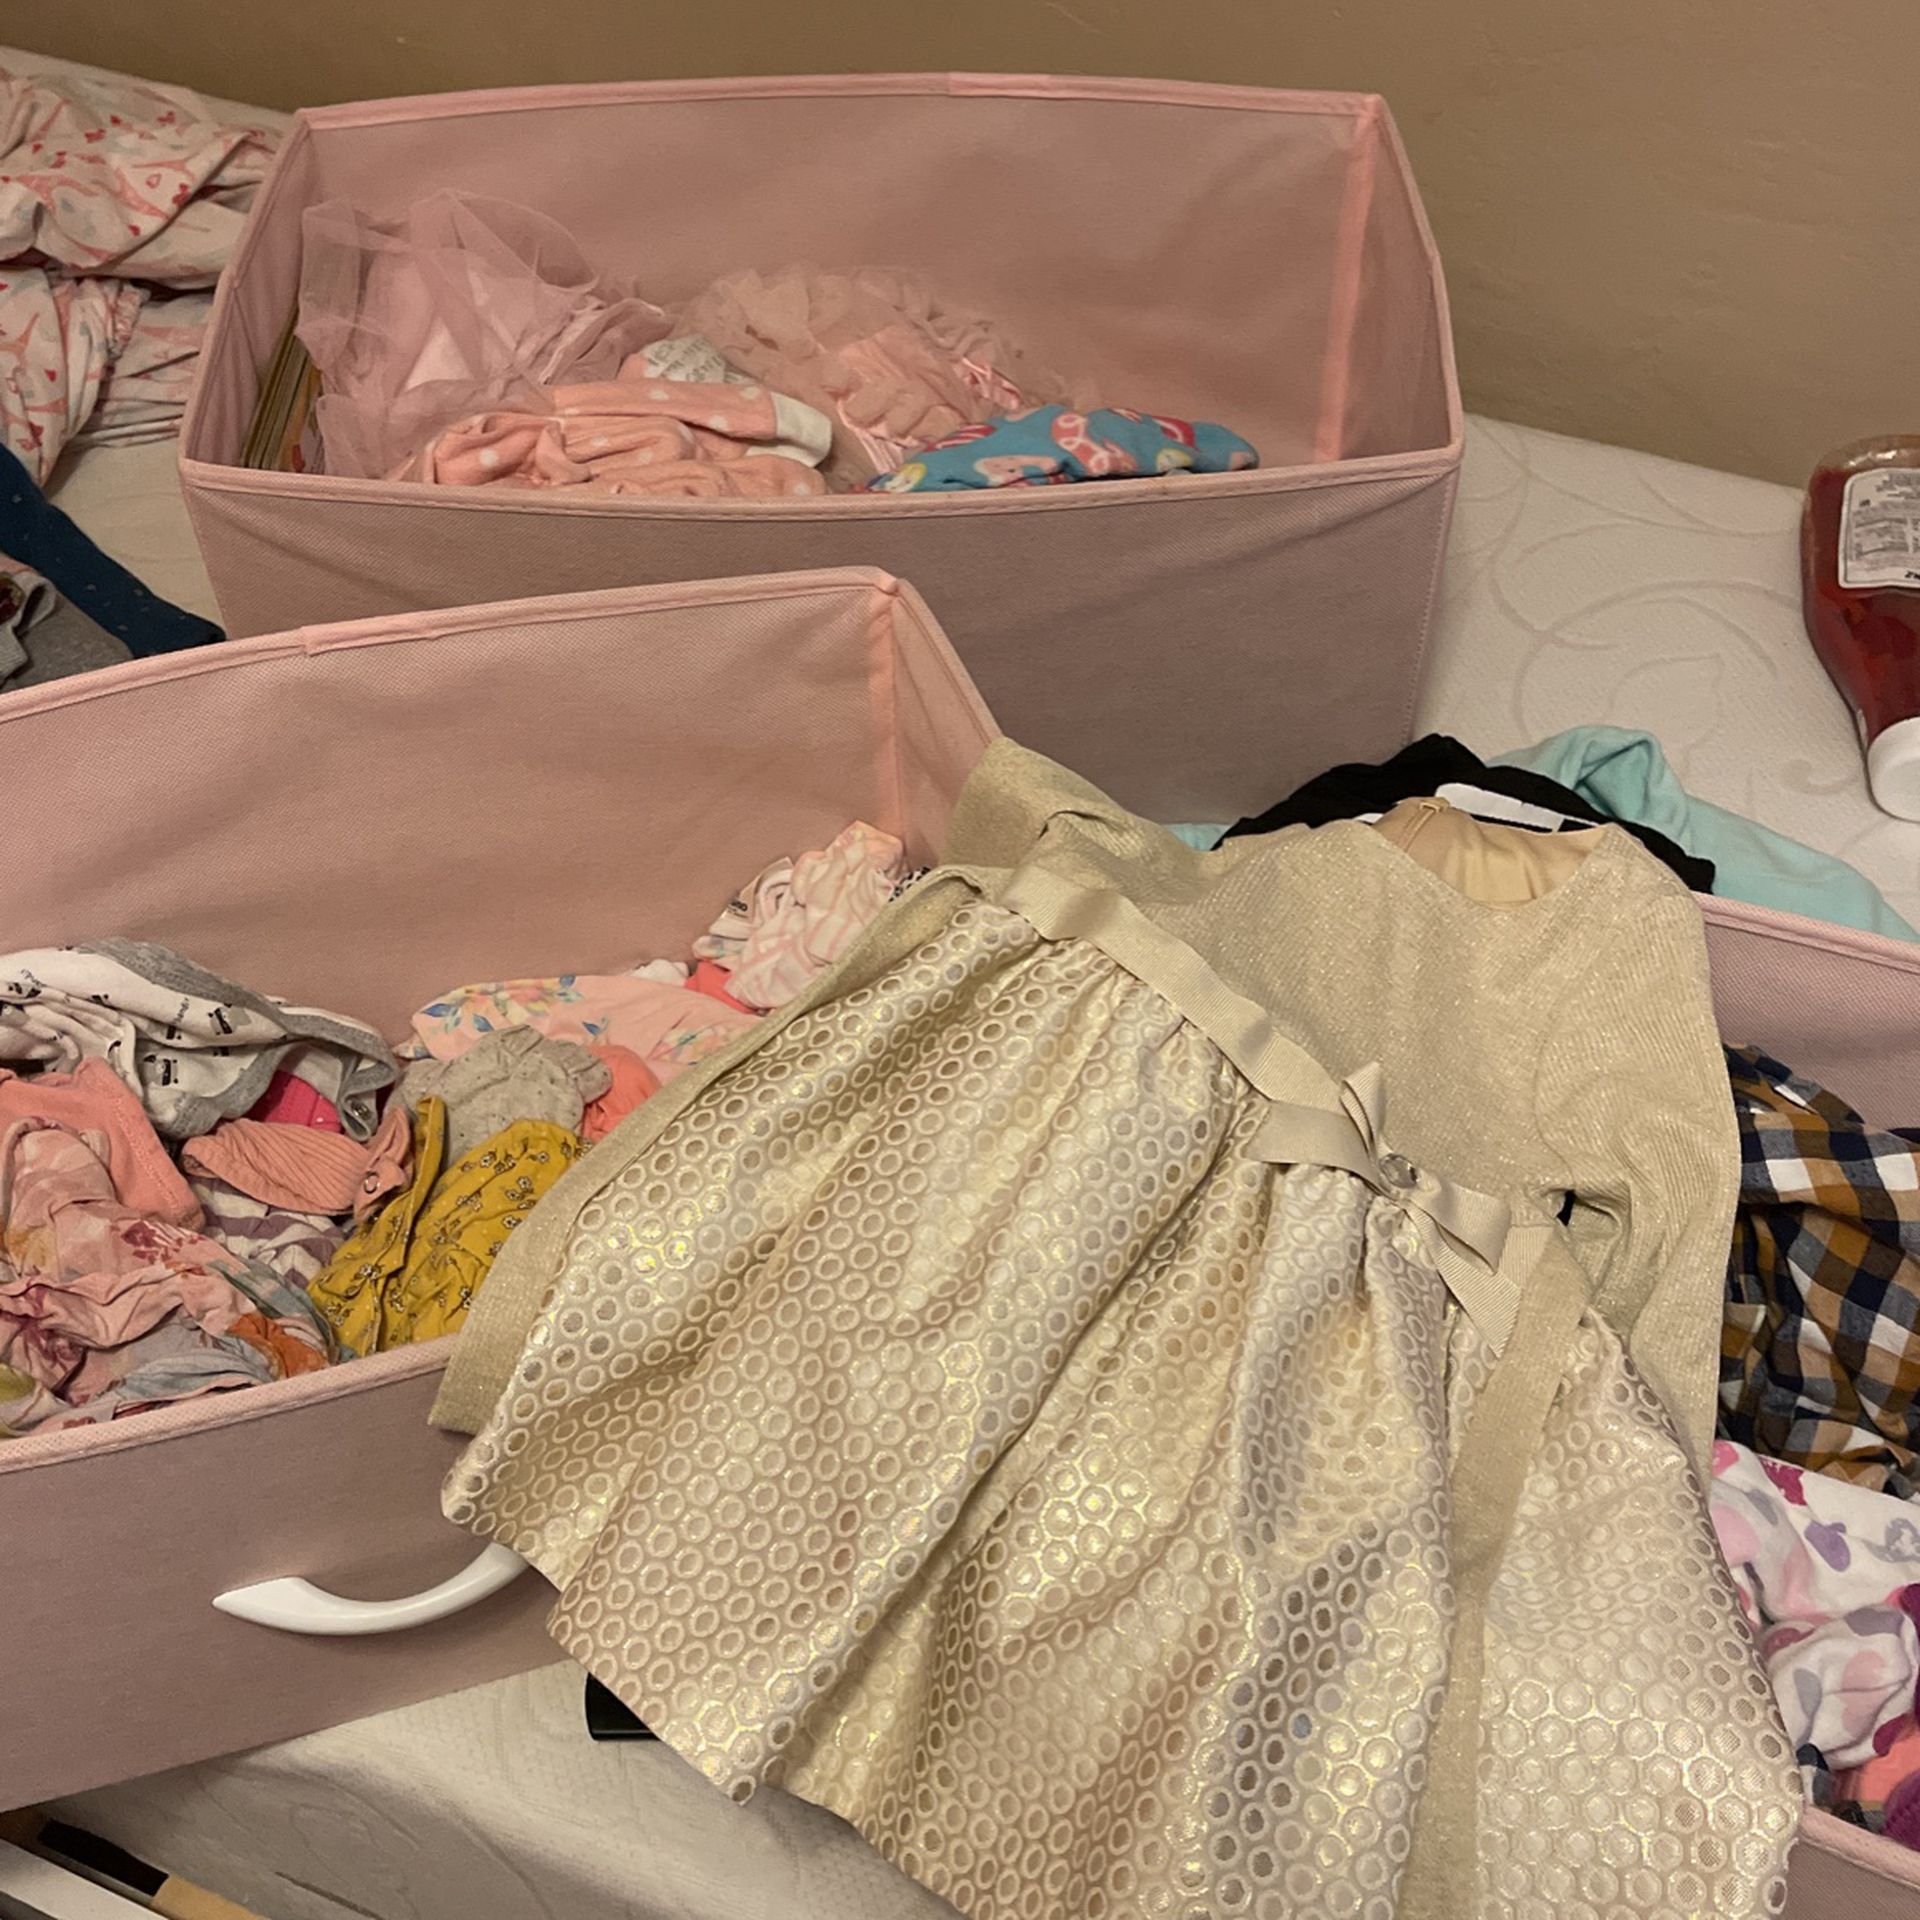 Baby Girls Clothes FREE near SDSU 